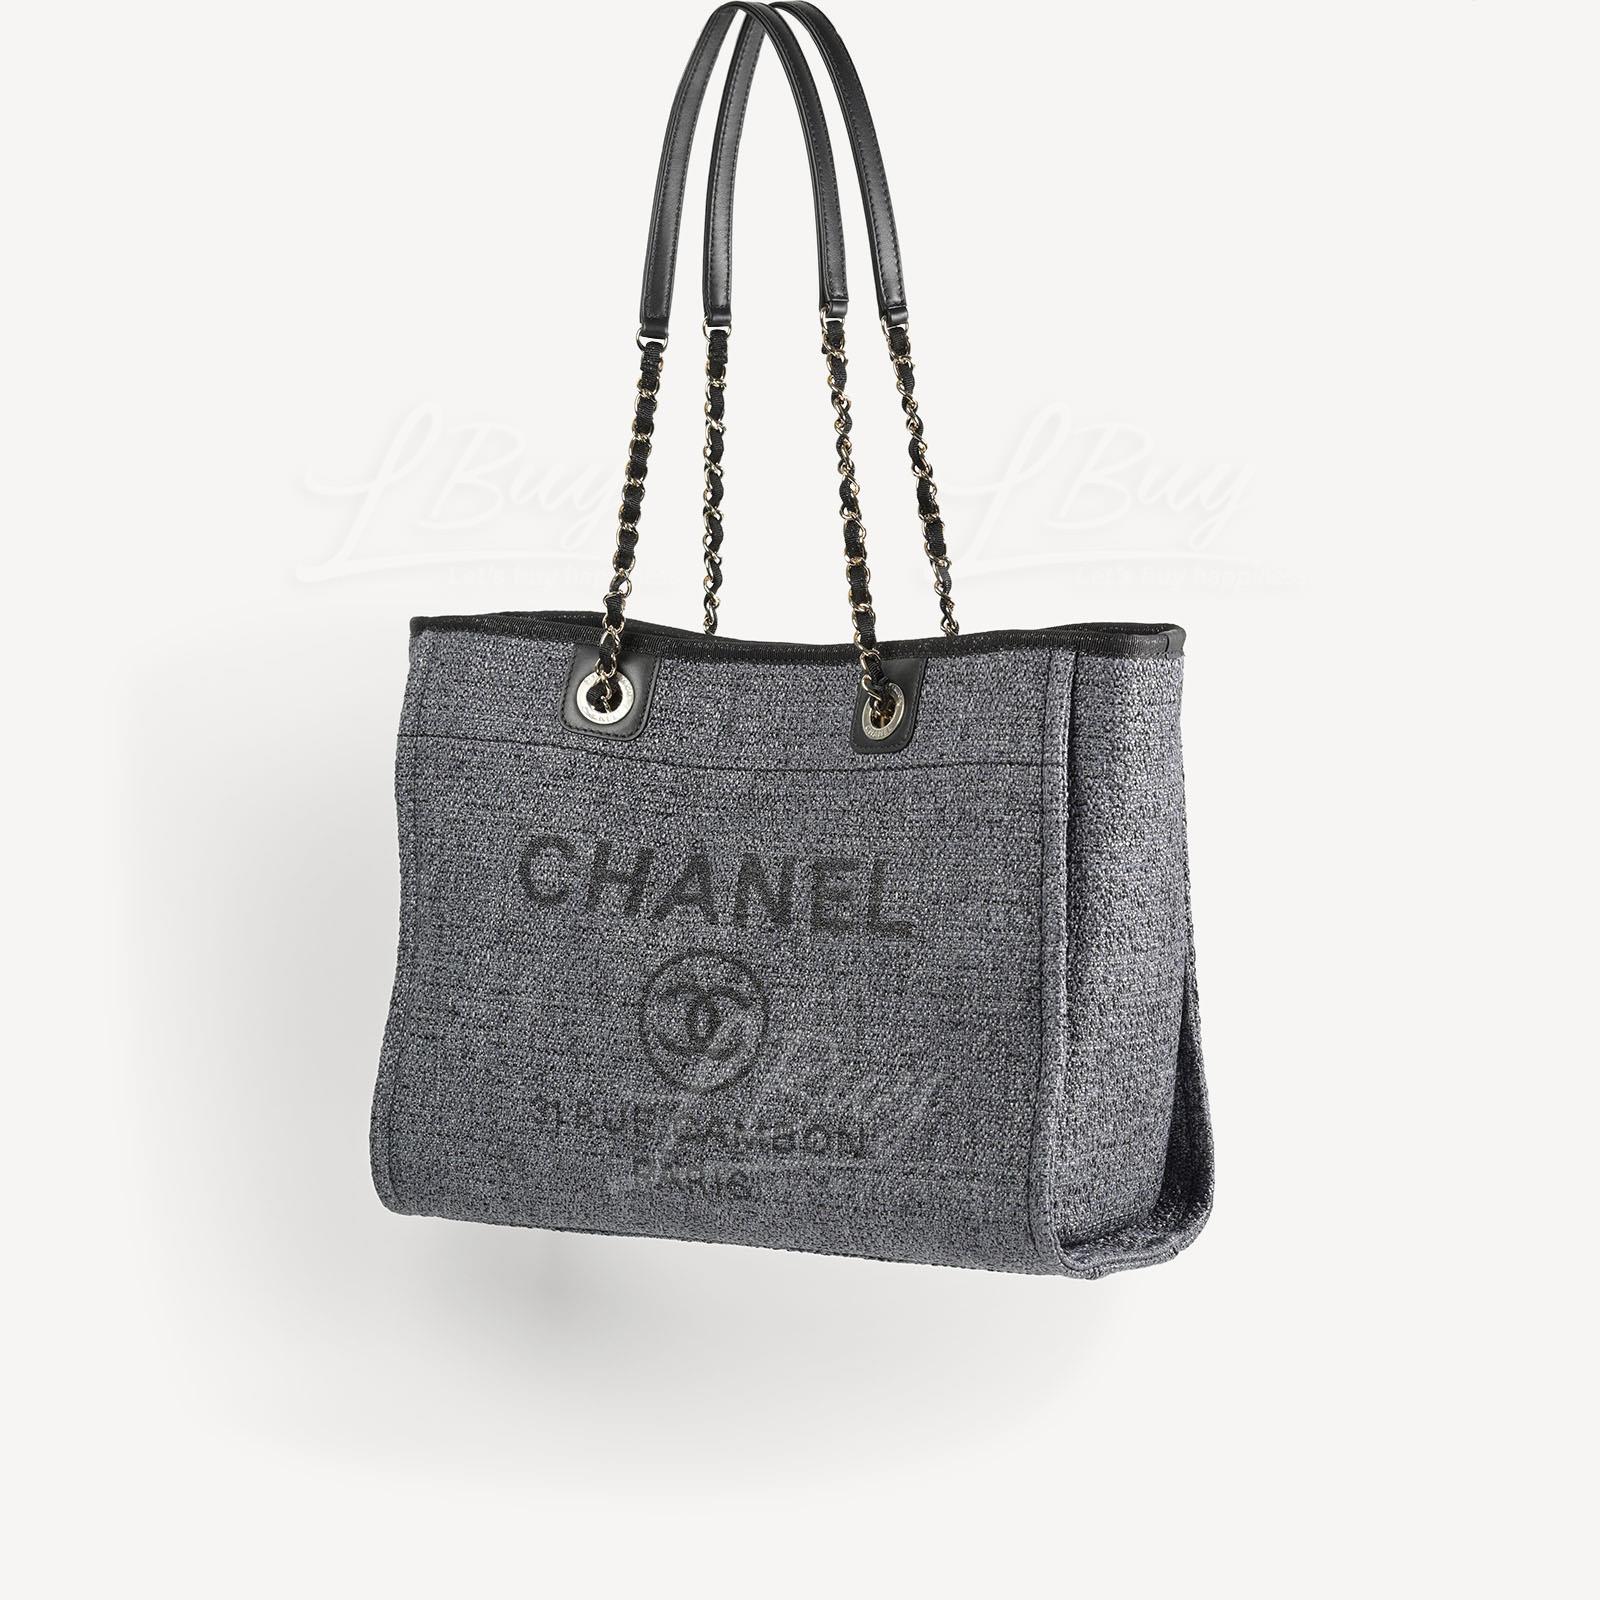 Chanel Deauville Medium Tote Bag Grey Black A67001